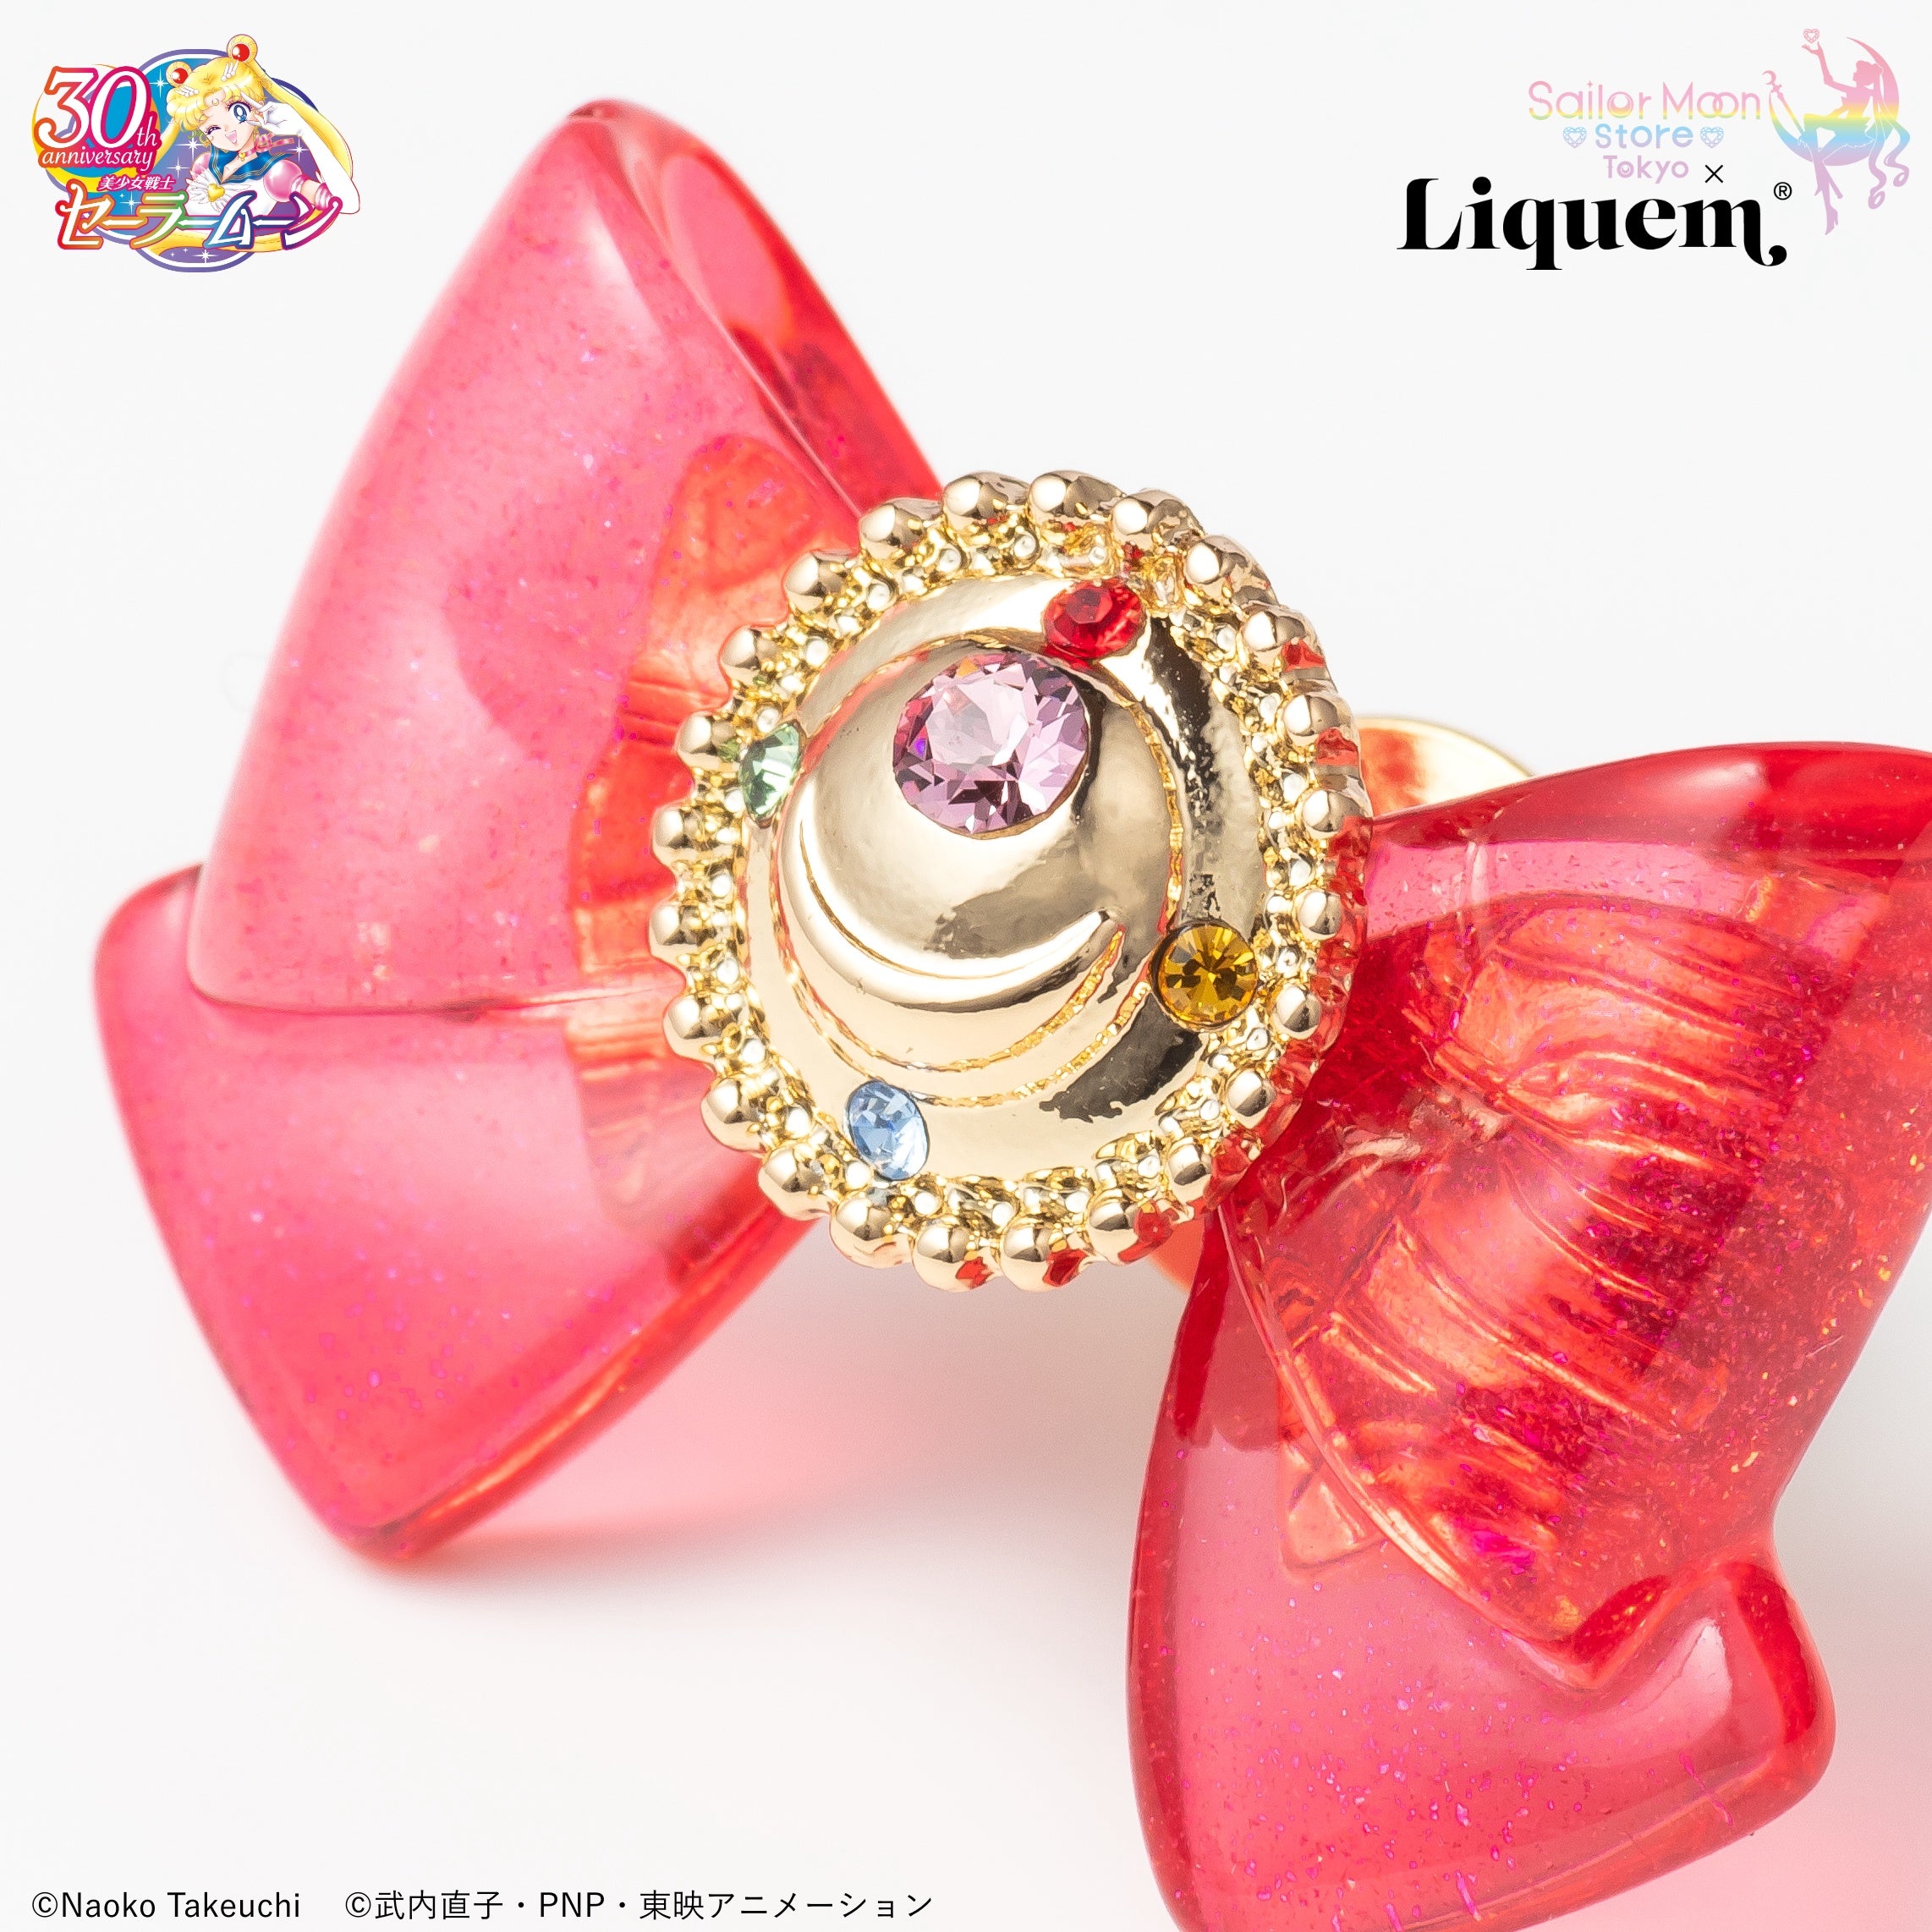 Sailor Moon store x Liquem / 変身ブローチリボンピンズ